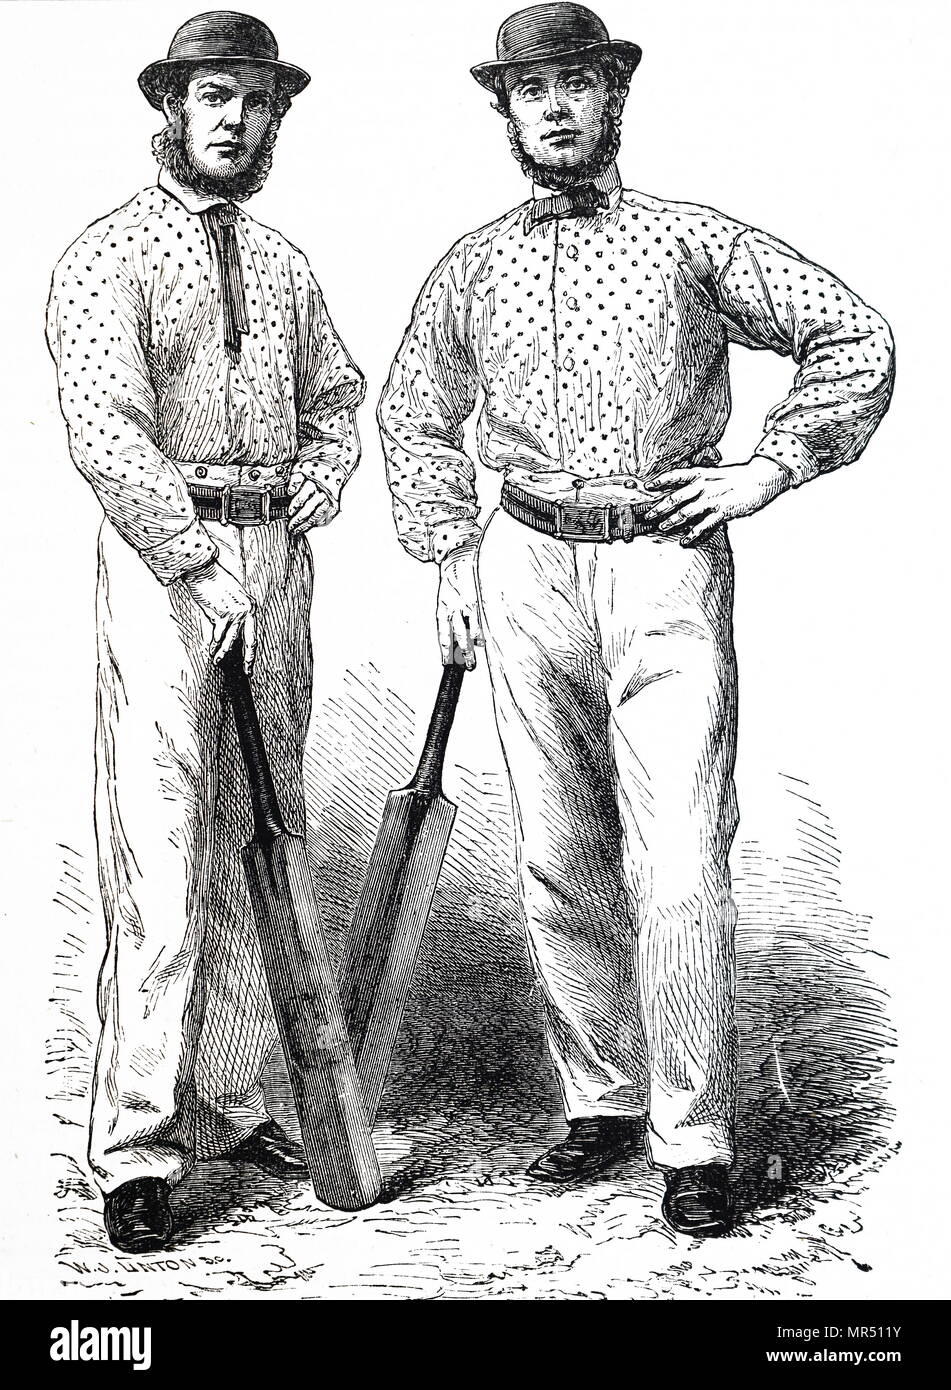 Illustration depicting Thomas Hayward and Robert Carpenter. Thomas Hayward (1835-1876) an English first-class cricketer. Robert Carpenter (1830-1901) an English first-class cricketer. Dated 19th century Stock Photo